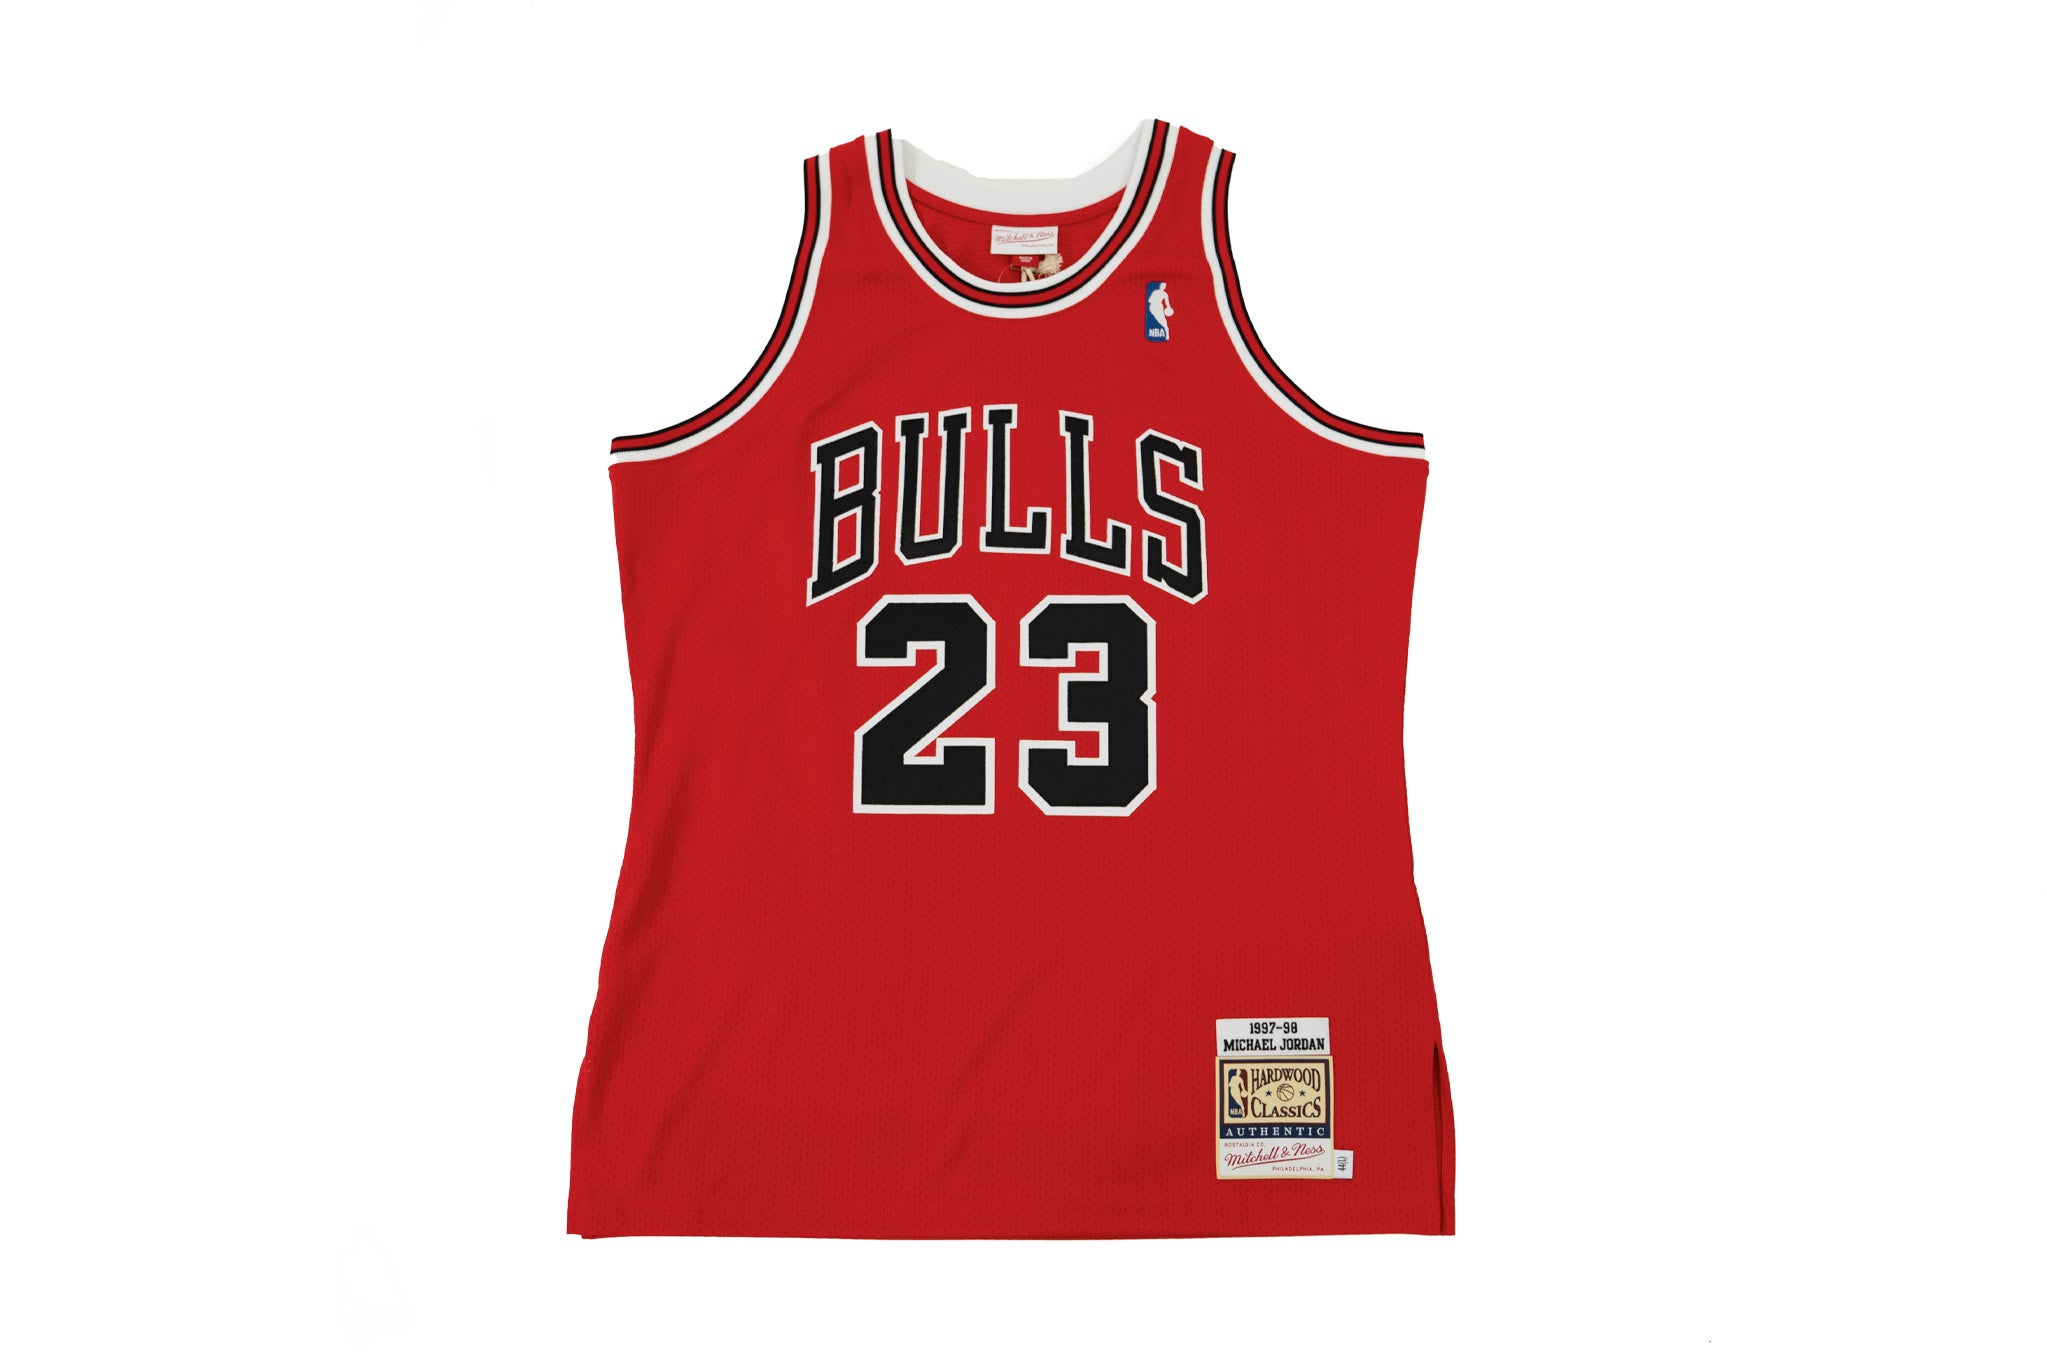 Mitchell & Ness Authentic Michael Jordan '97 Chicago Bulls Road Jersey